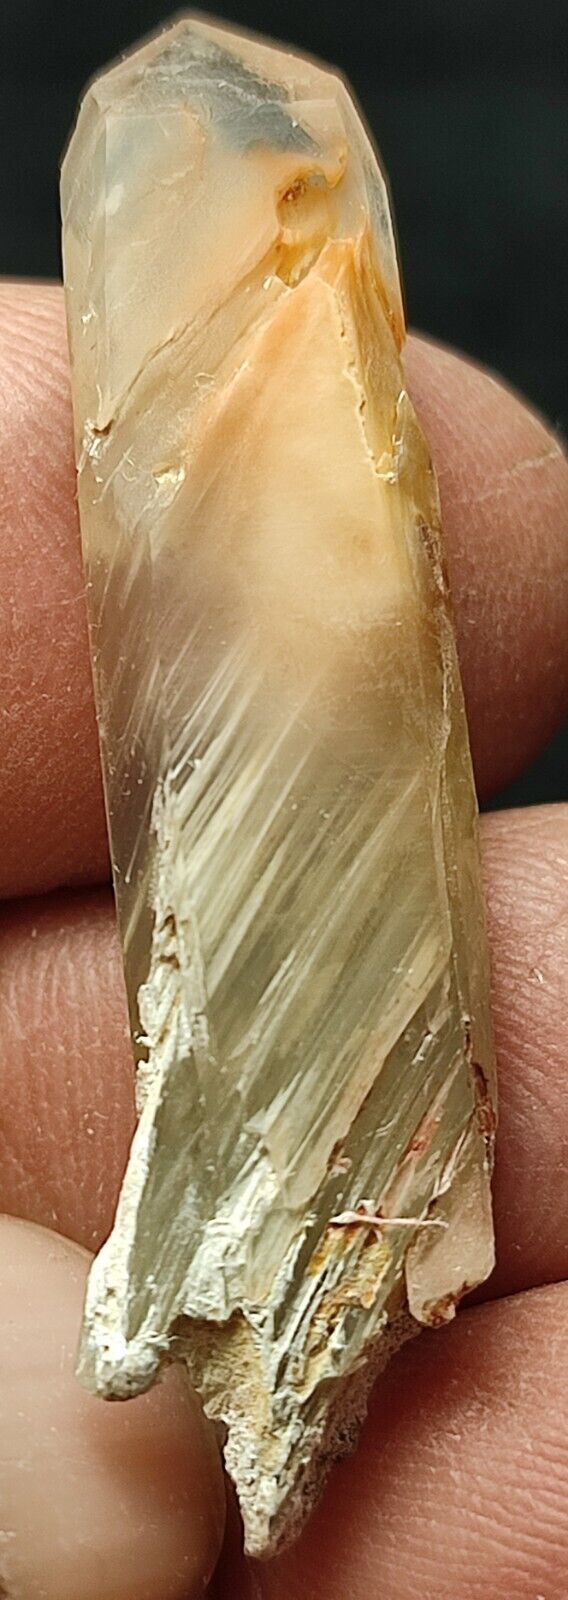 Amphibil quartz nice terminated crystal.